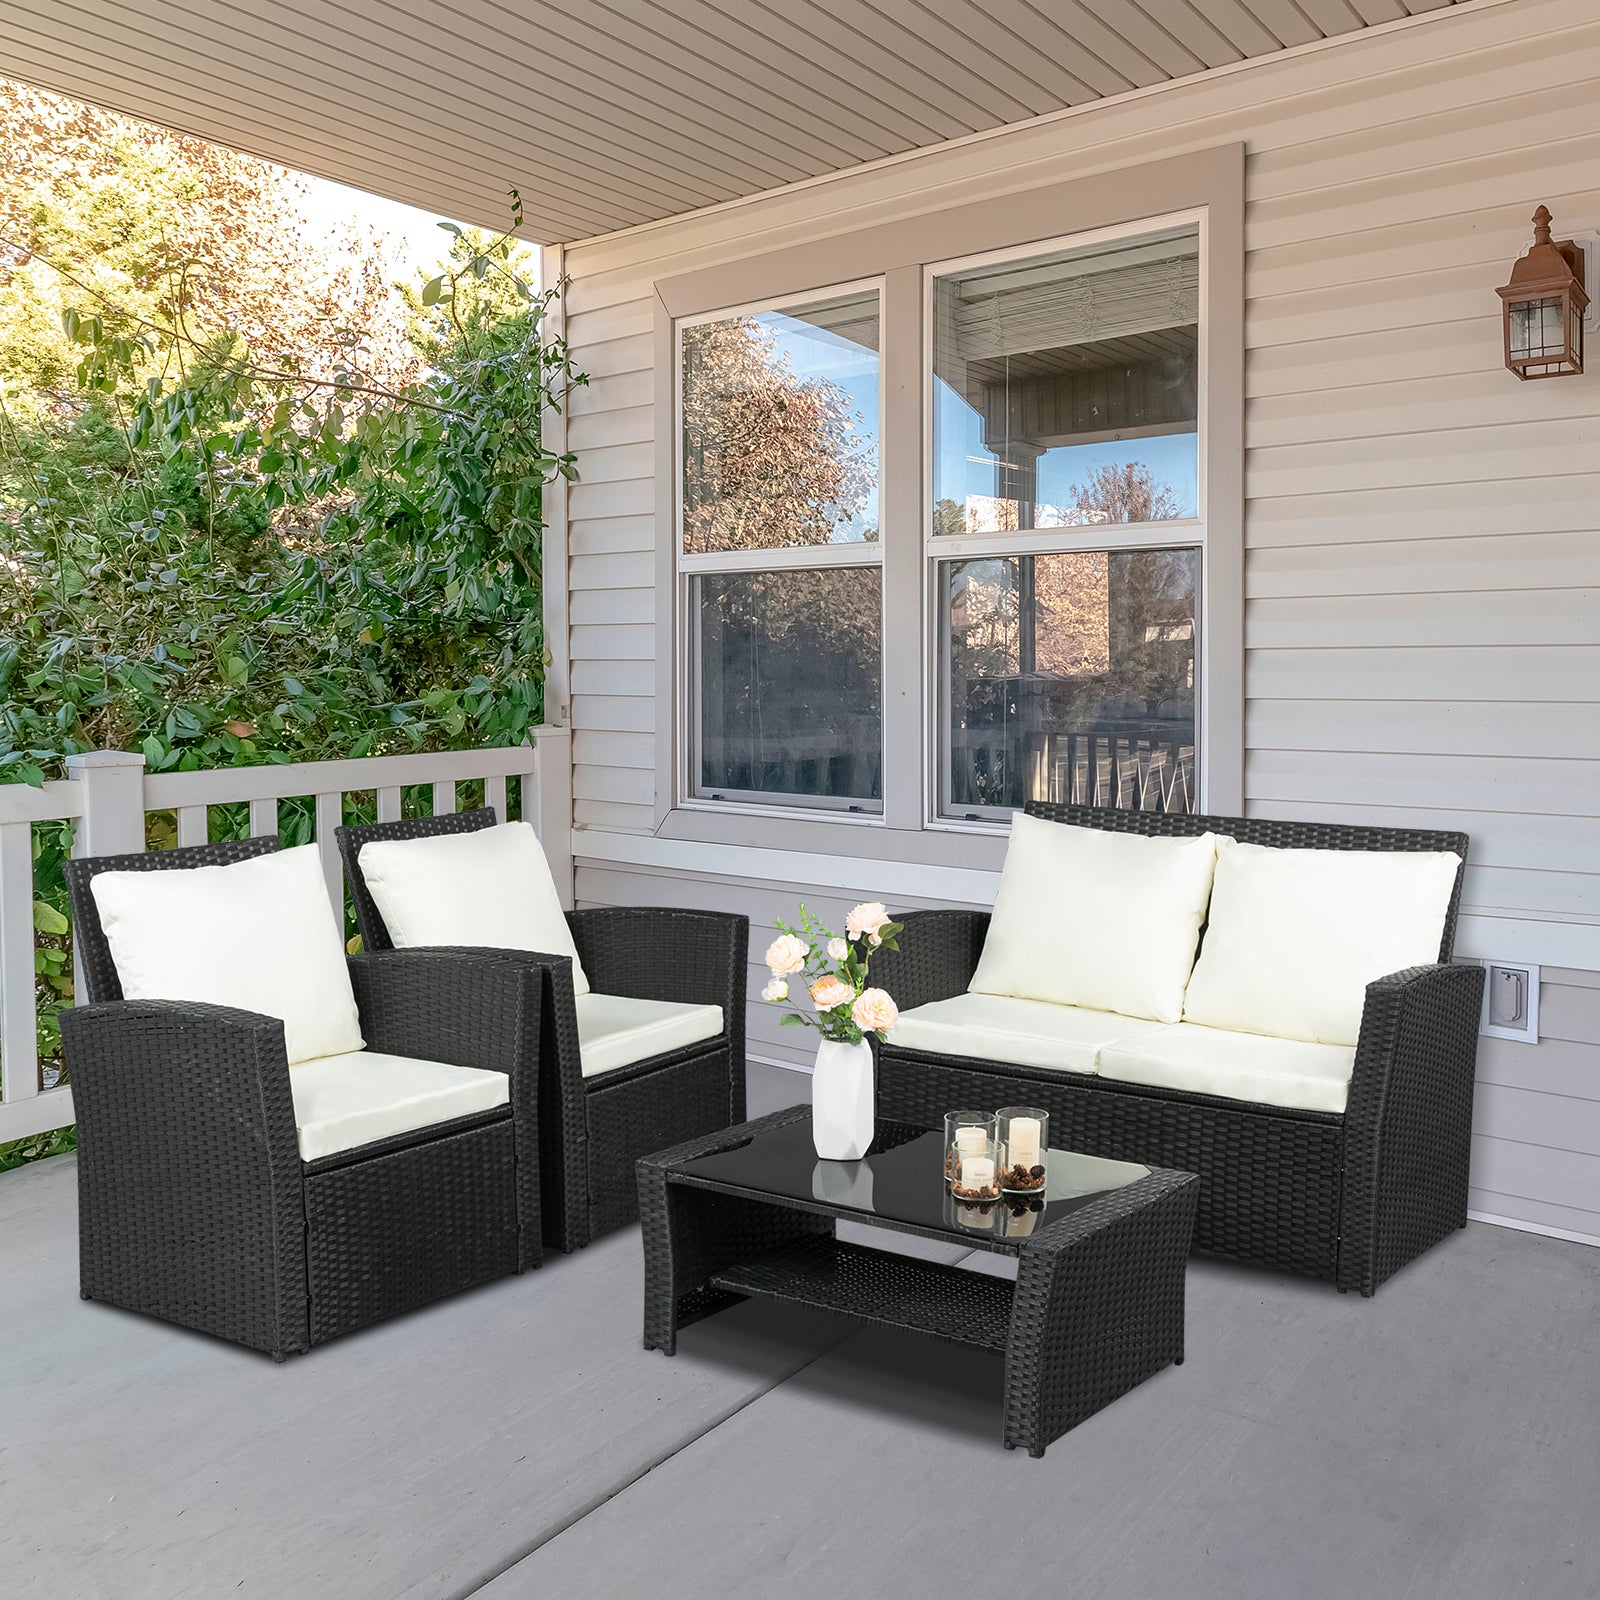 4 Full Chair Black Rattan Garden Furniture Set